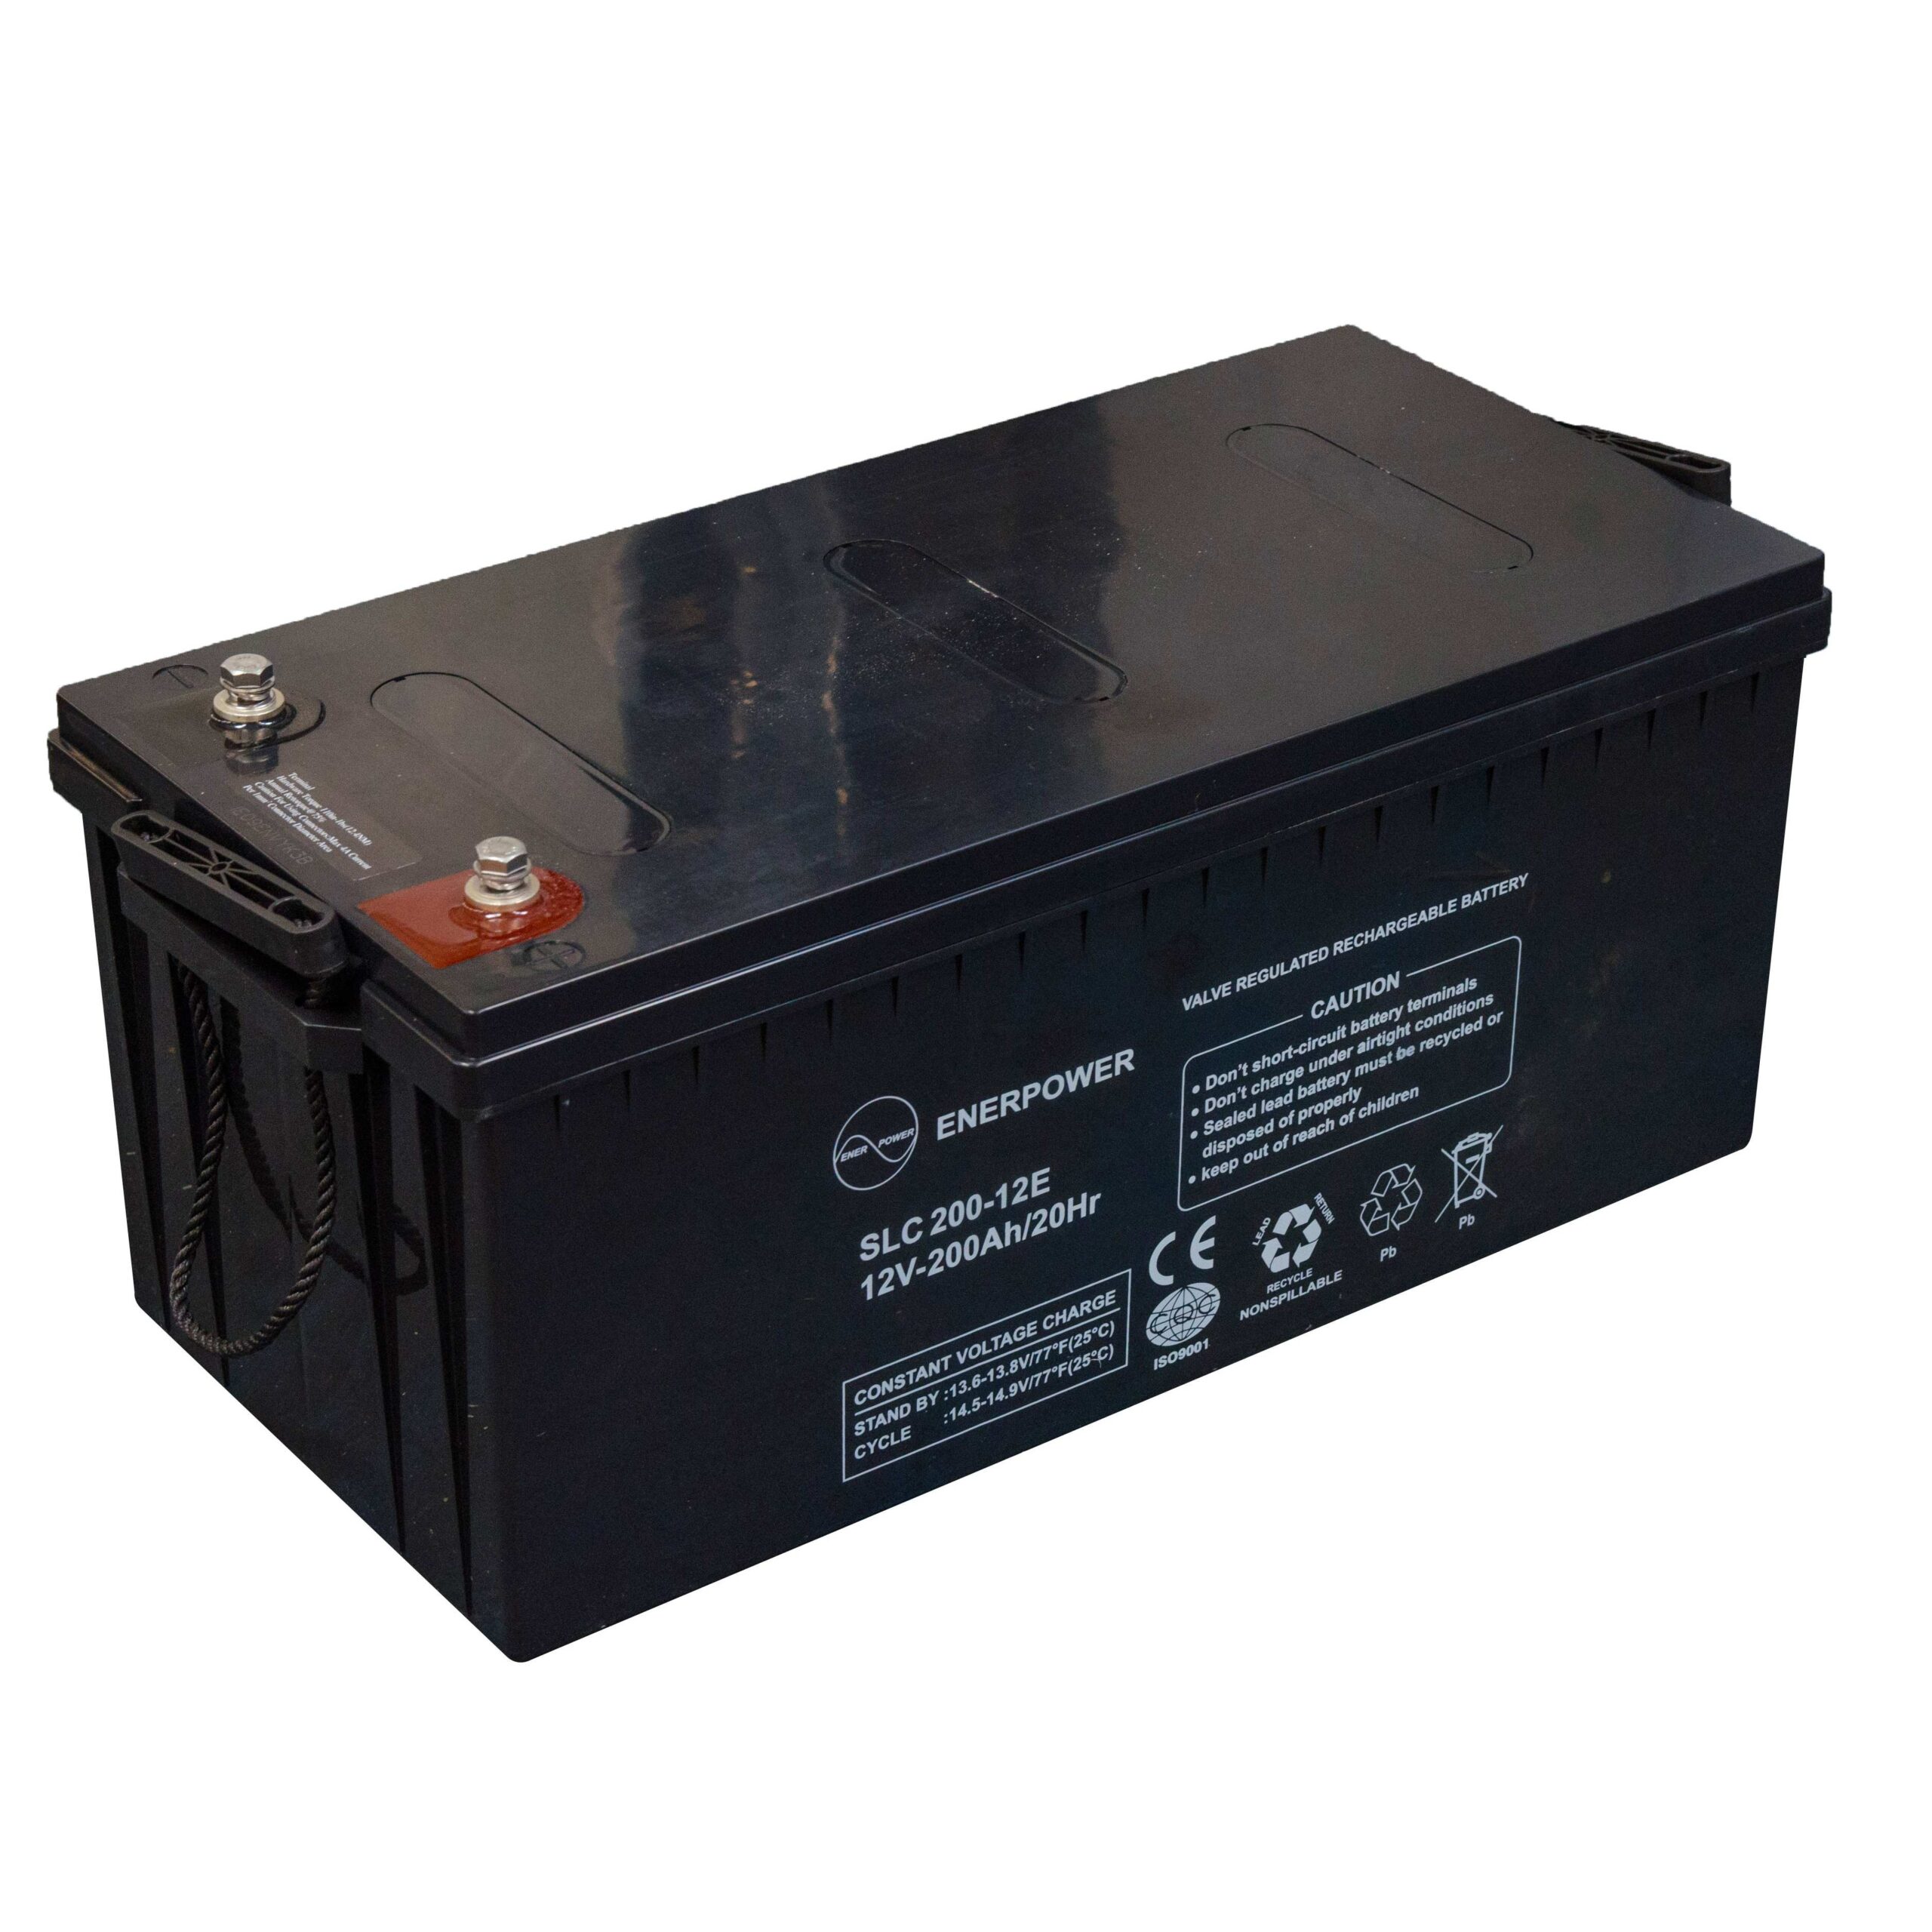 SLC200-12 12V 200Ah AGM ENERPOWER battery